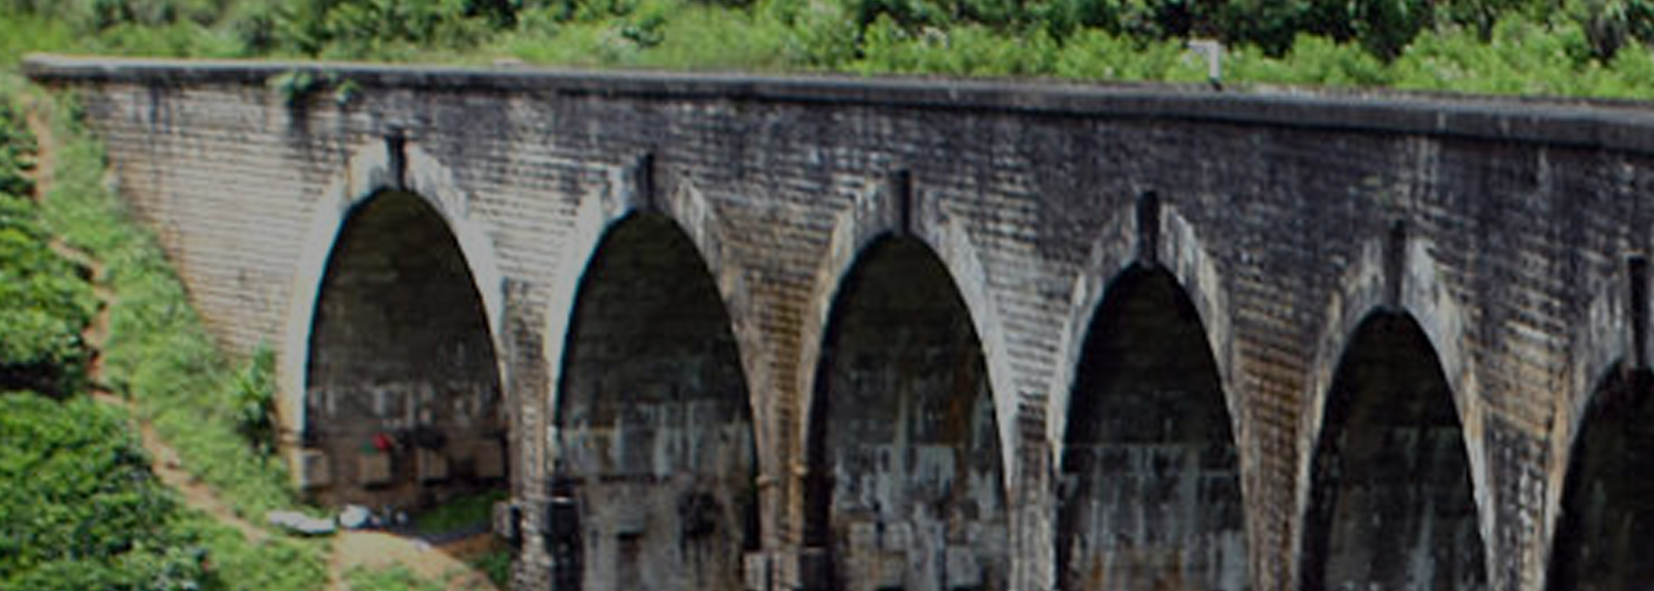 The Nine Arch Bridge